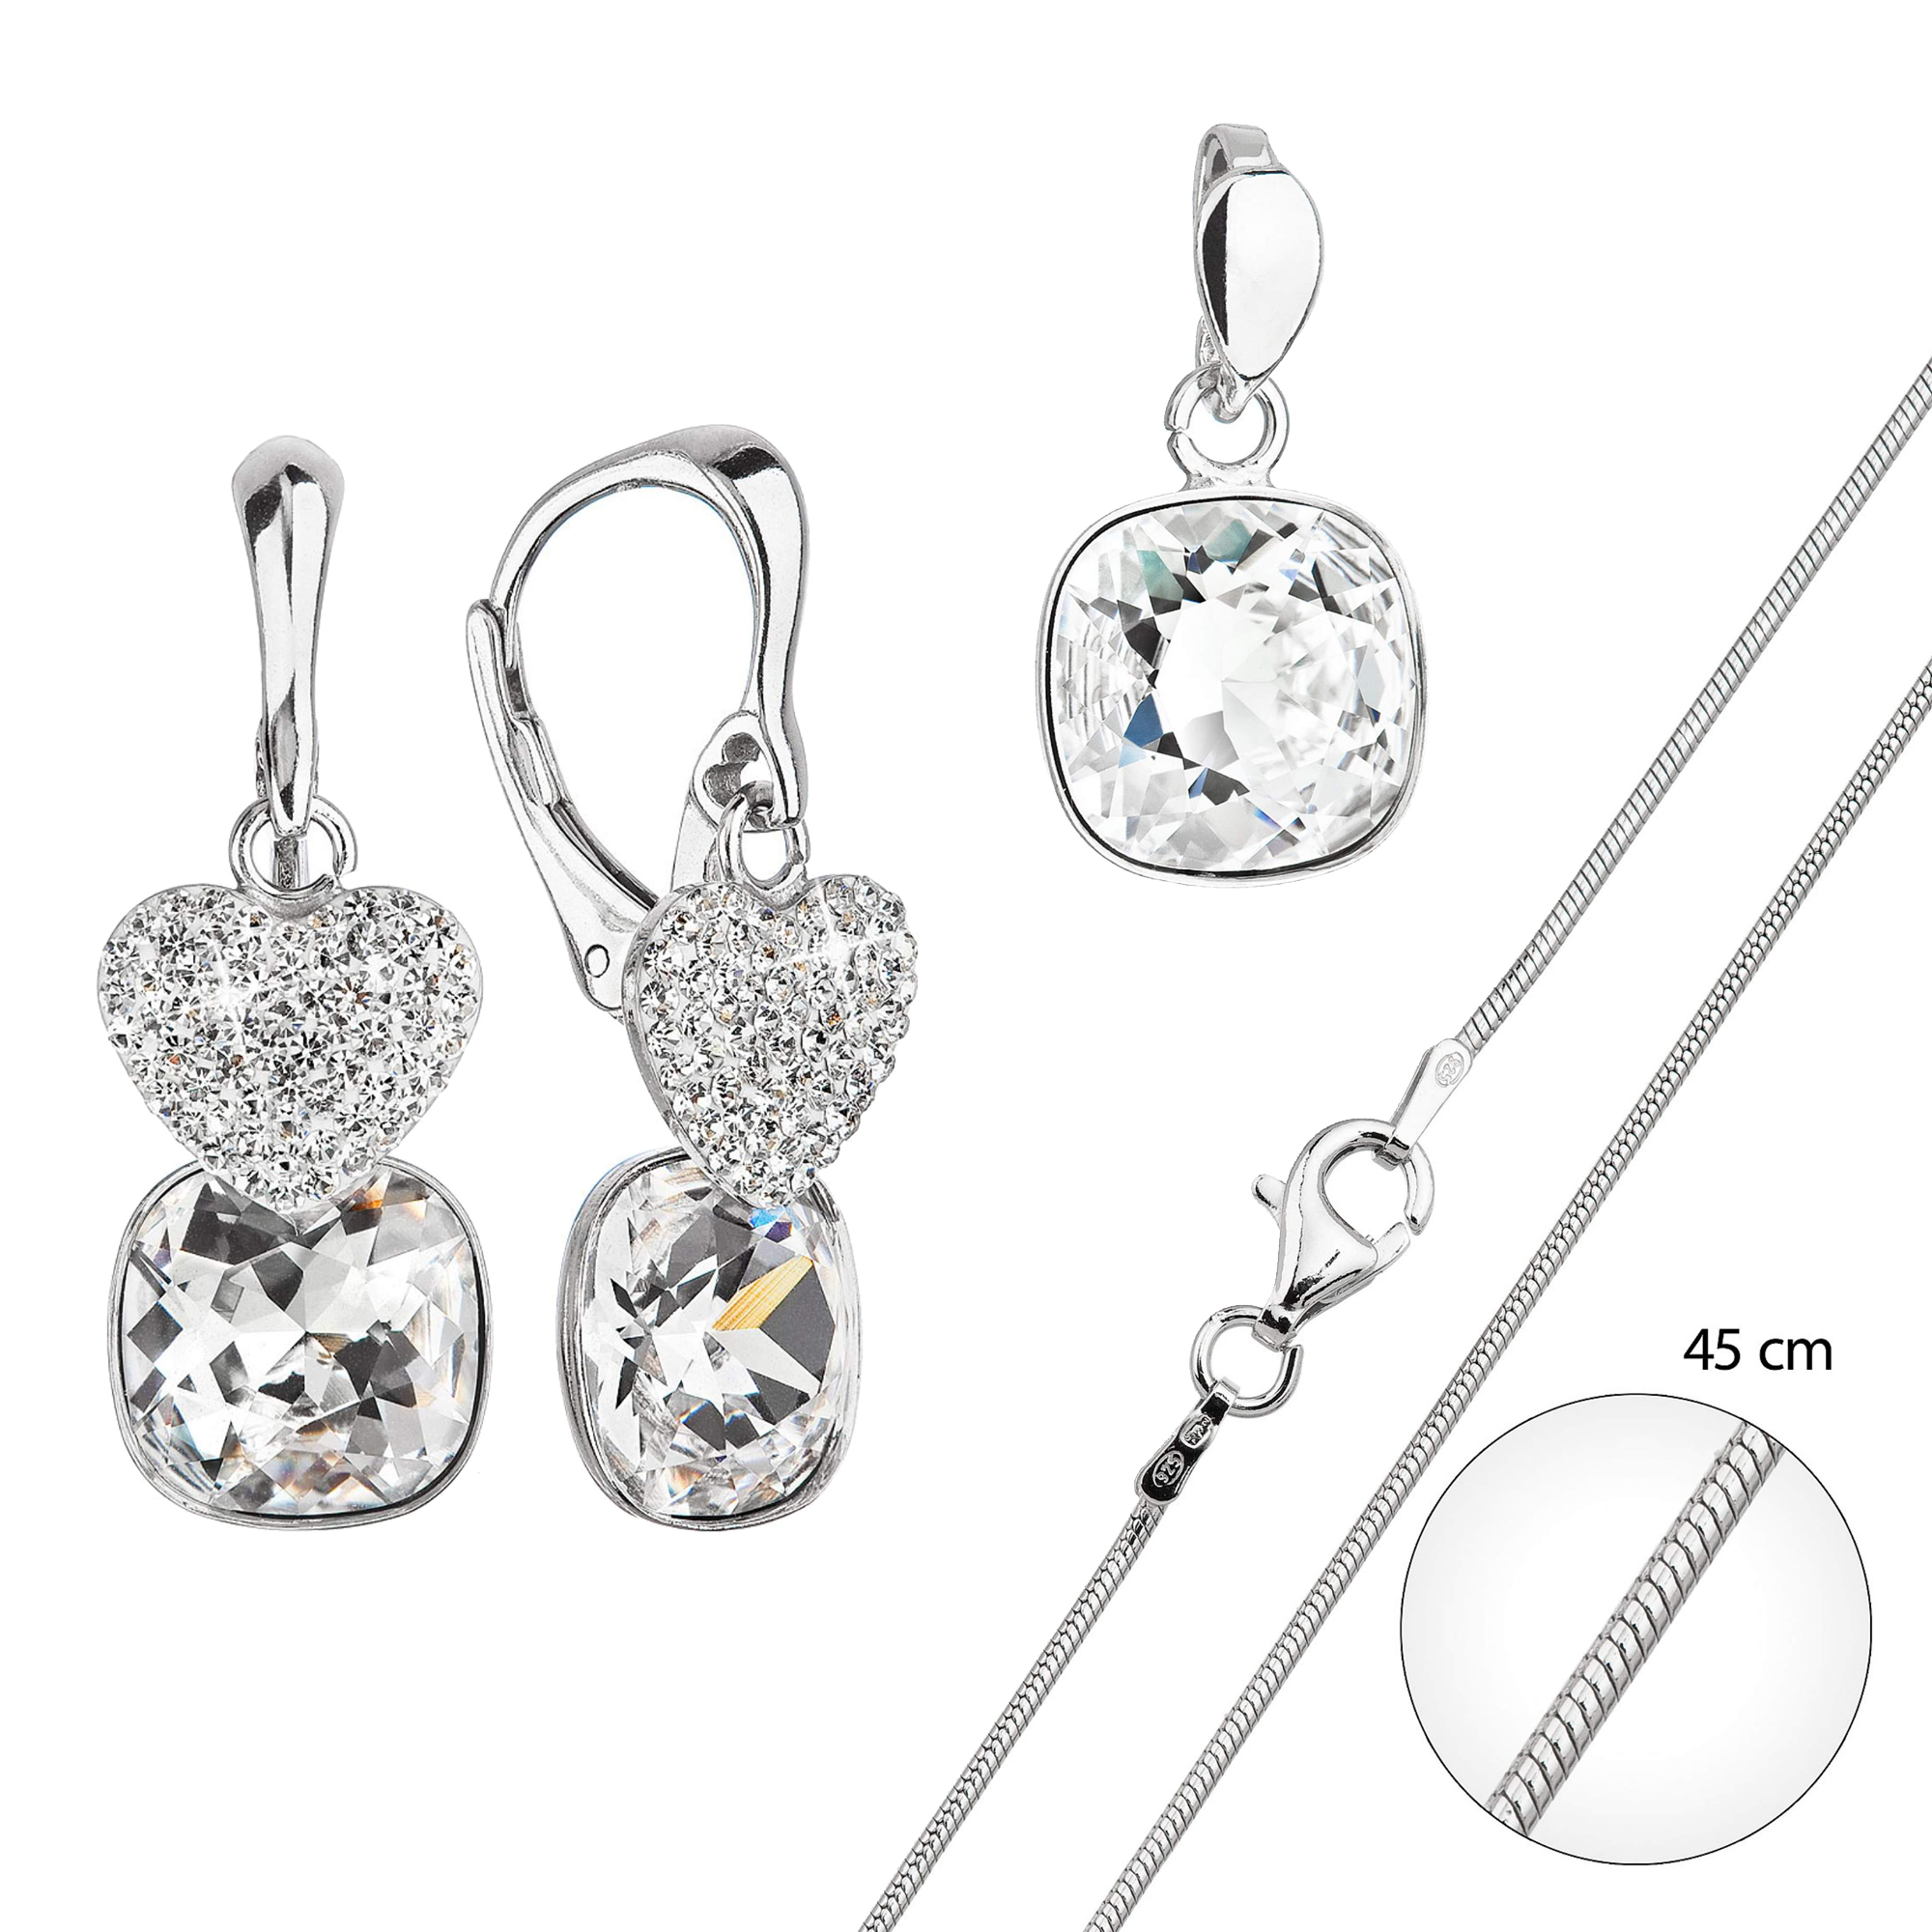 Evolution Group Sada stříbrných šperků náušnice se srdíčky a náhrdelník bílá AG SADA 6